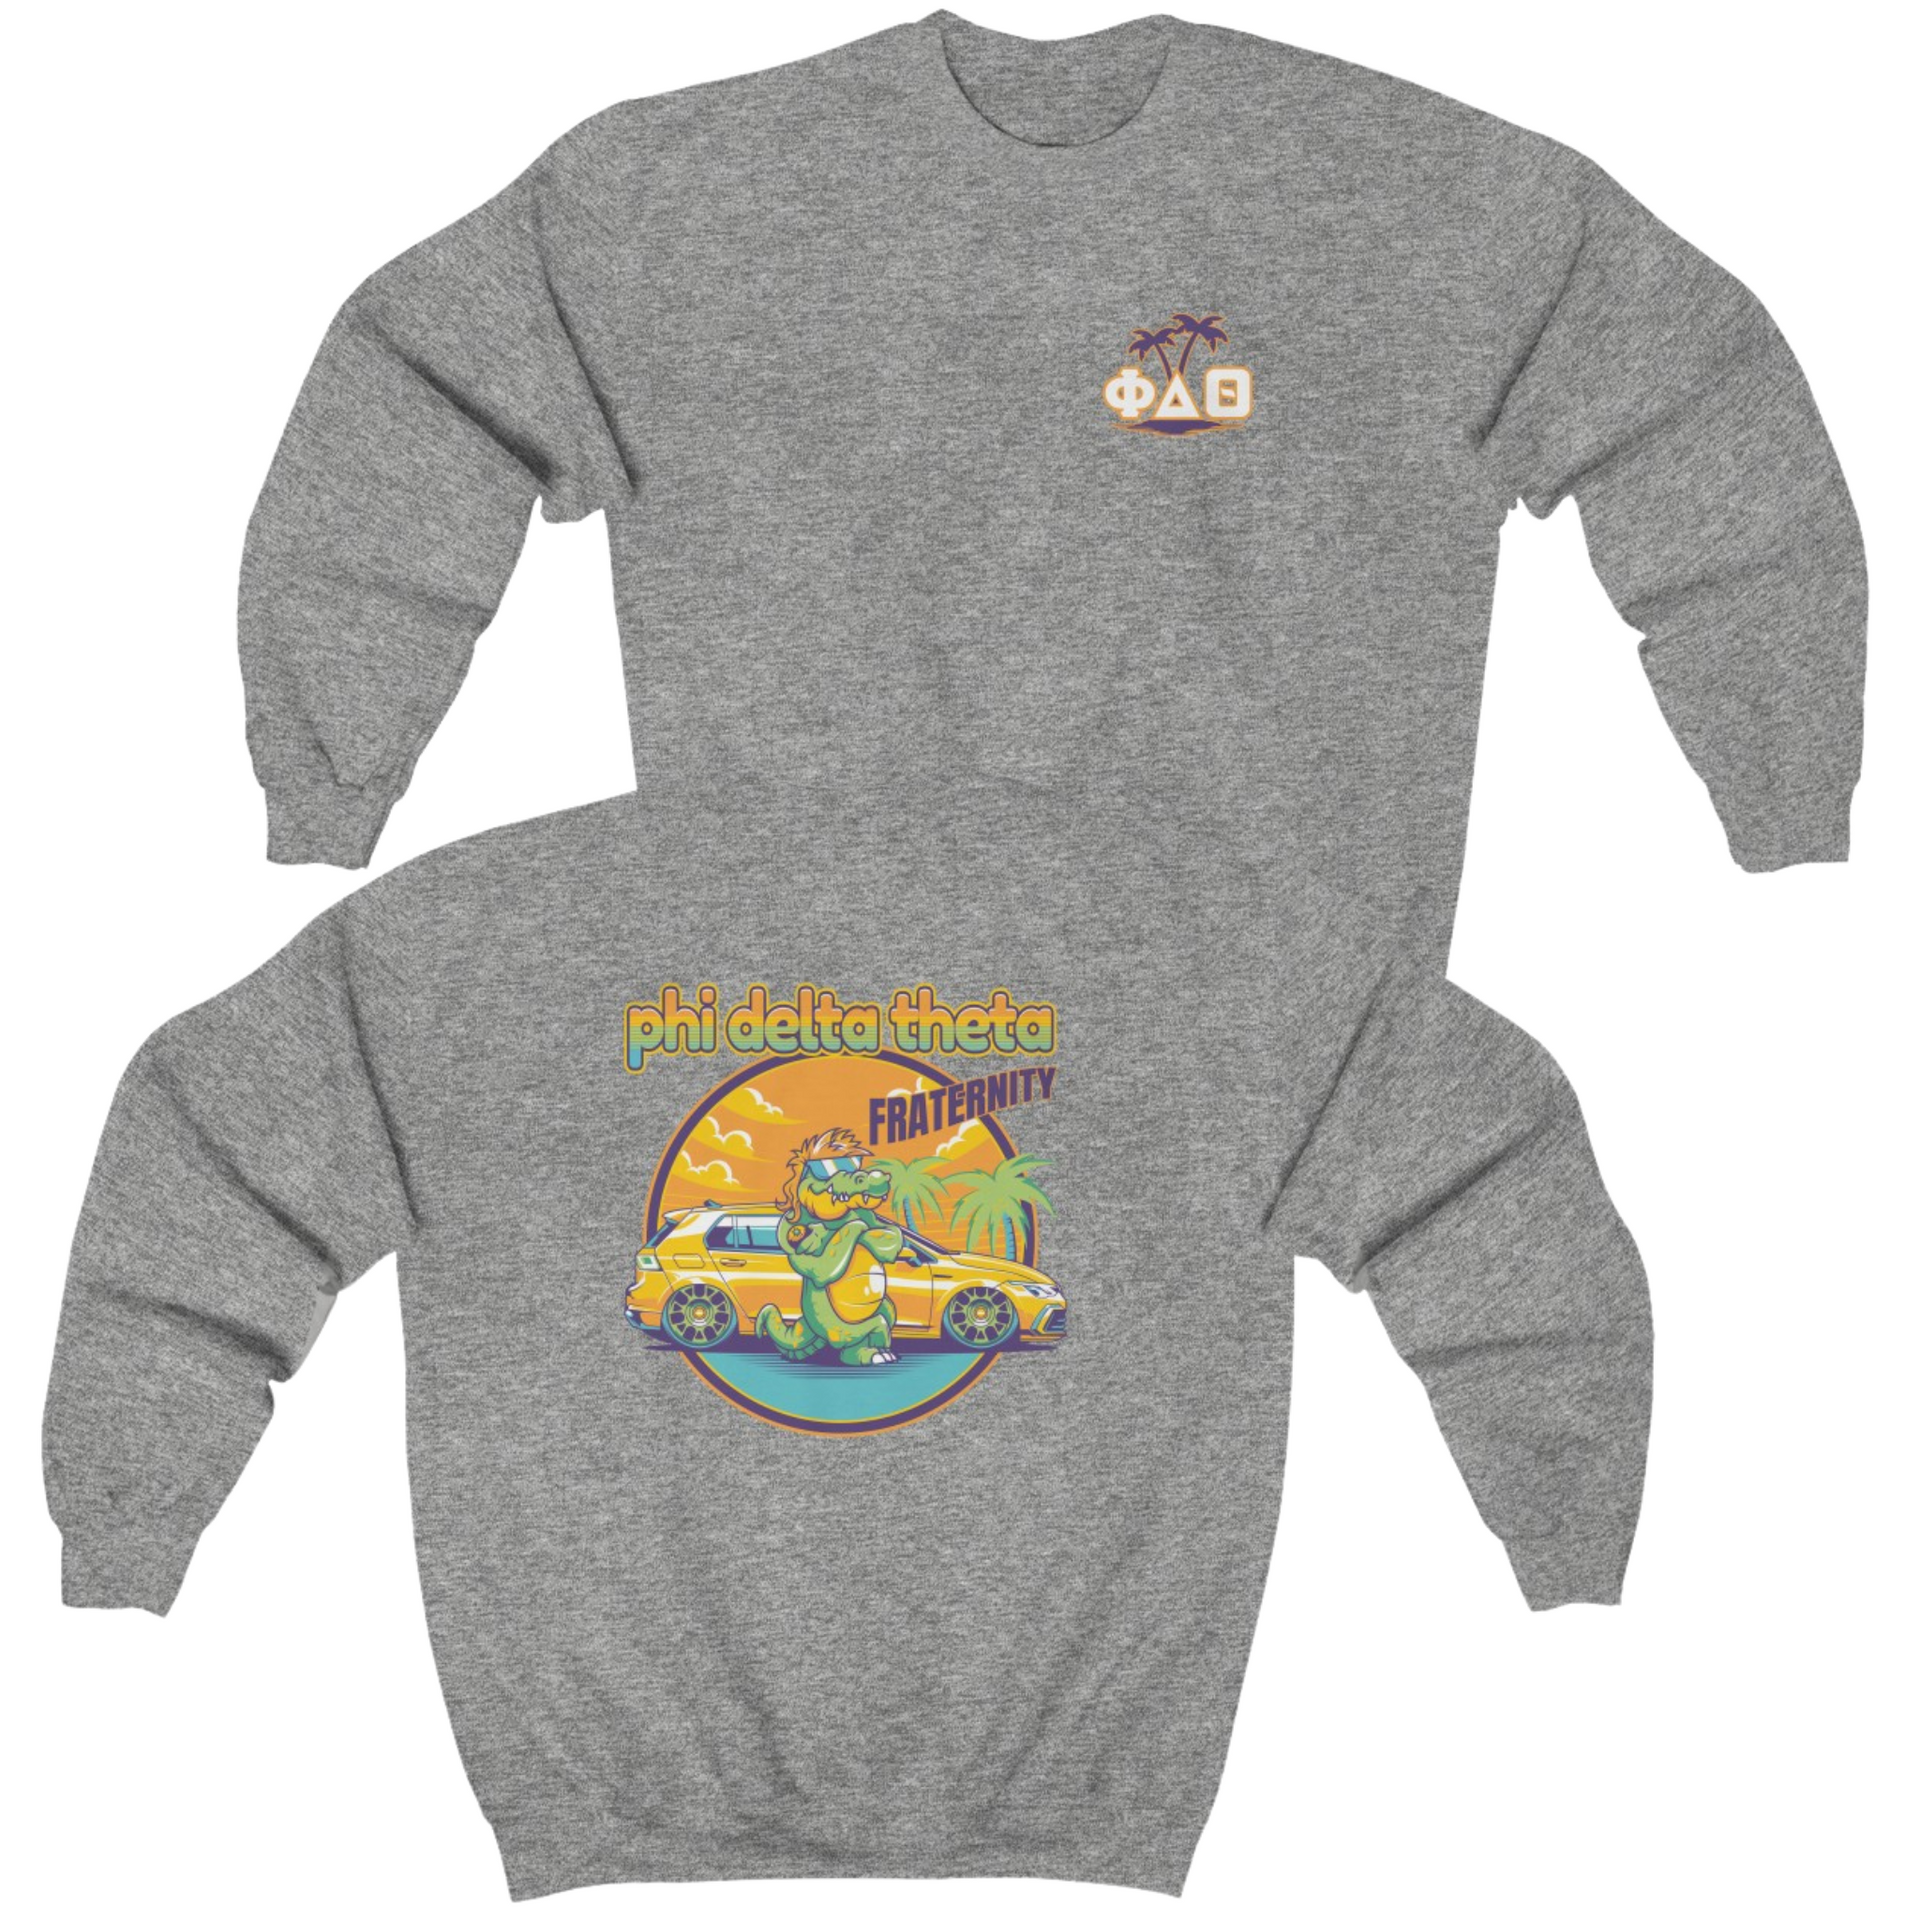 grey Phi Delta Theta Graphic Crewneck Sweatshirt | Cool Croc | phi delta theta fraternity greek apparel 